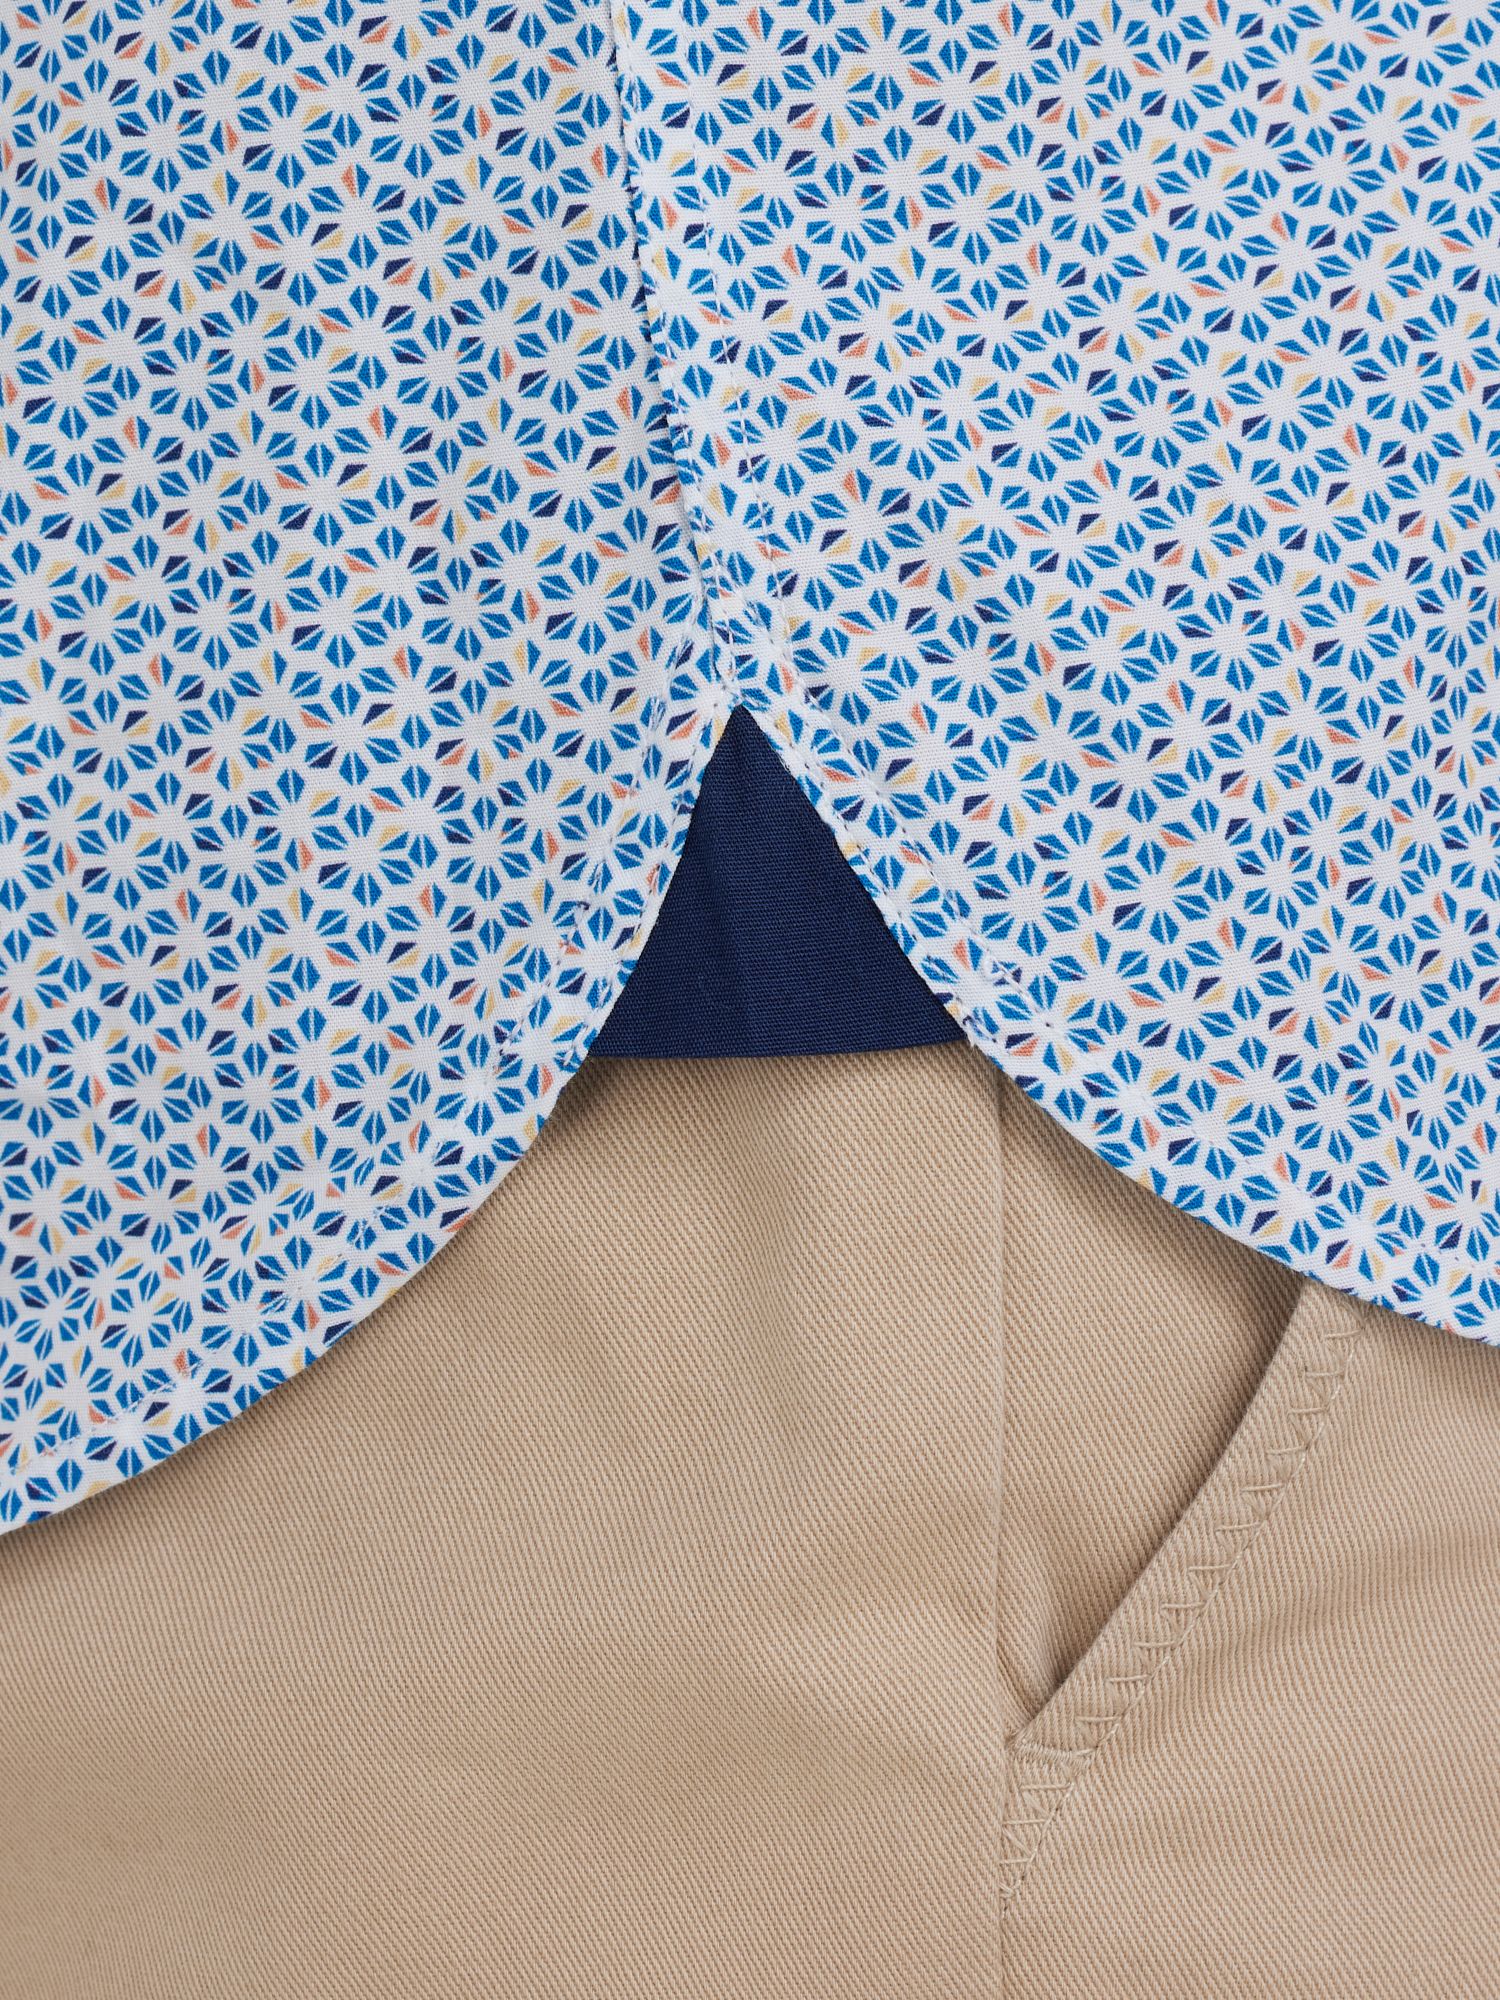 Buy Raging Bull Floral Print Cotton Poplin Shirt, Blue/White Online at johnlewis.com